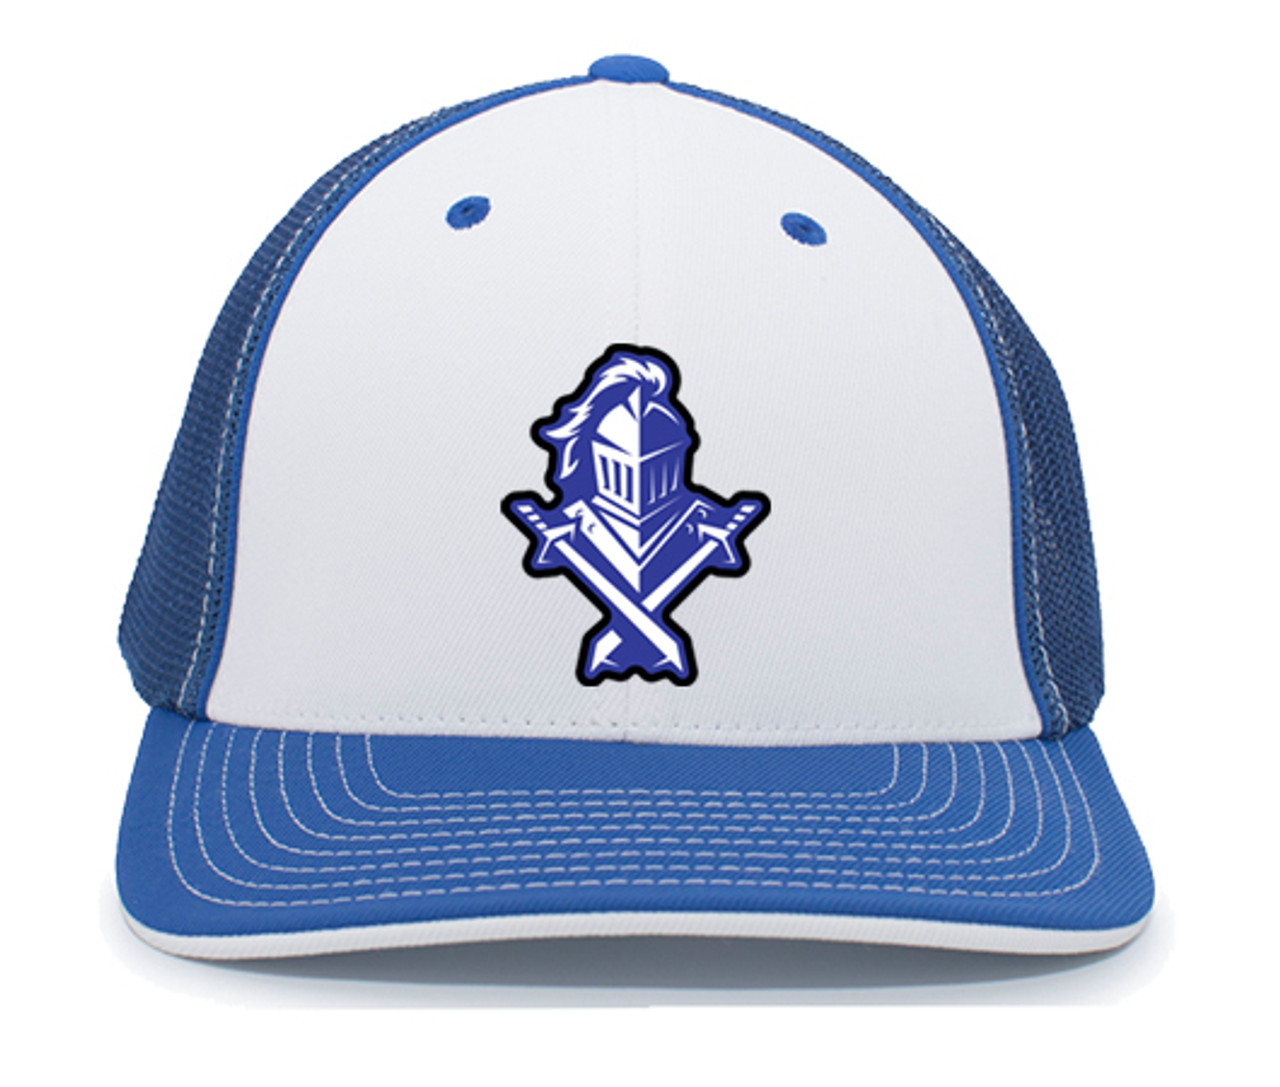 Baseball Hats, Head wear, Hats